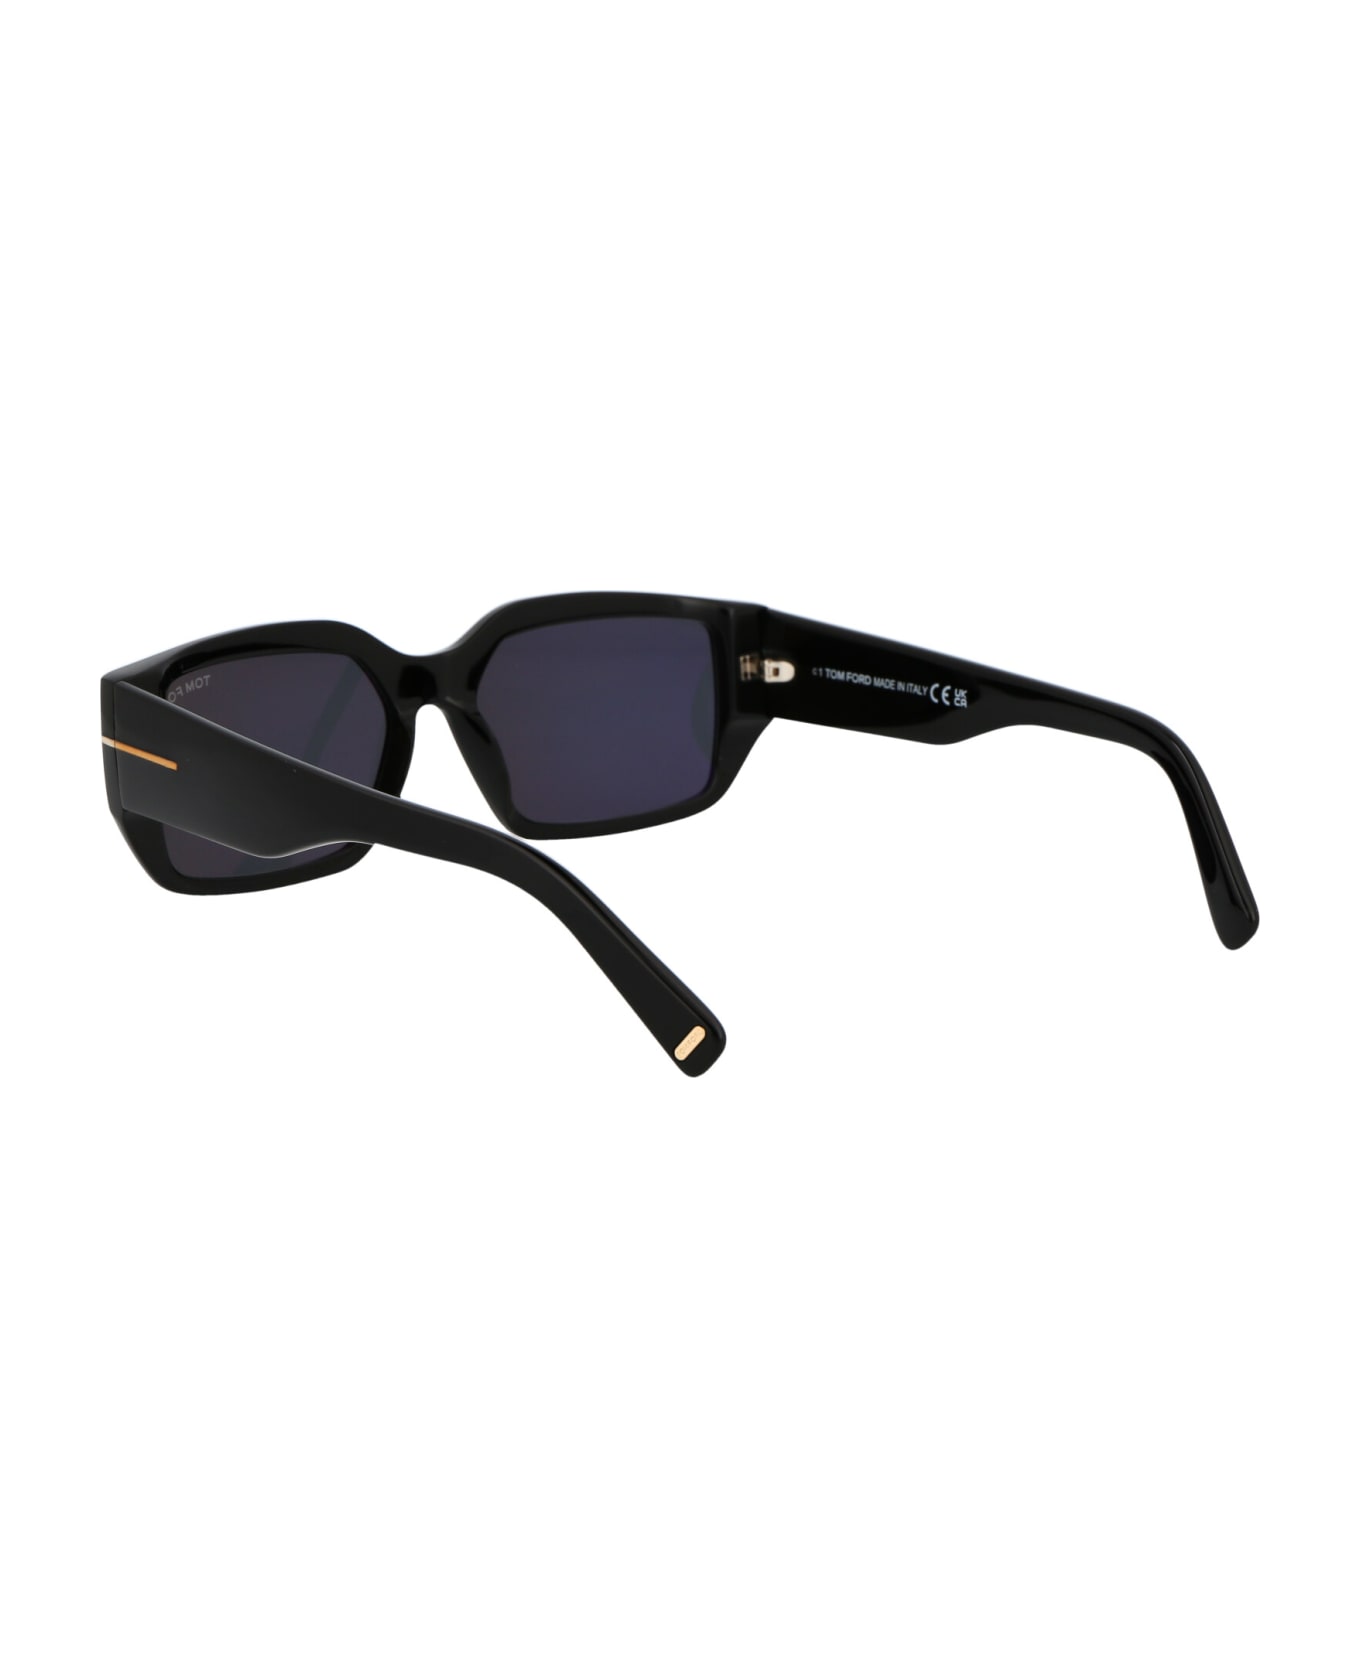 Tom Ford Eyewear Silvano-02 Sunglasses - 01A Nero Lucido / Fumo